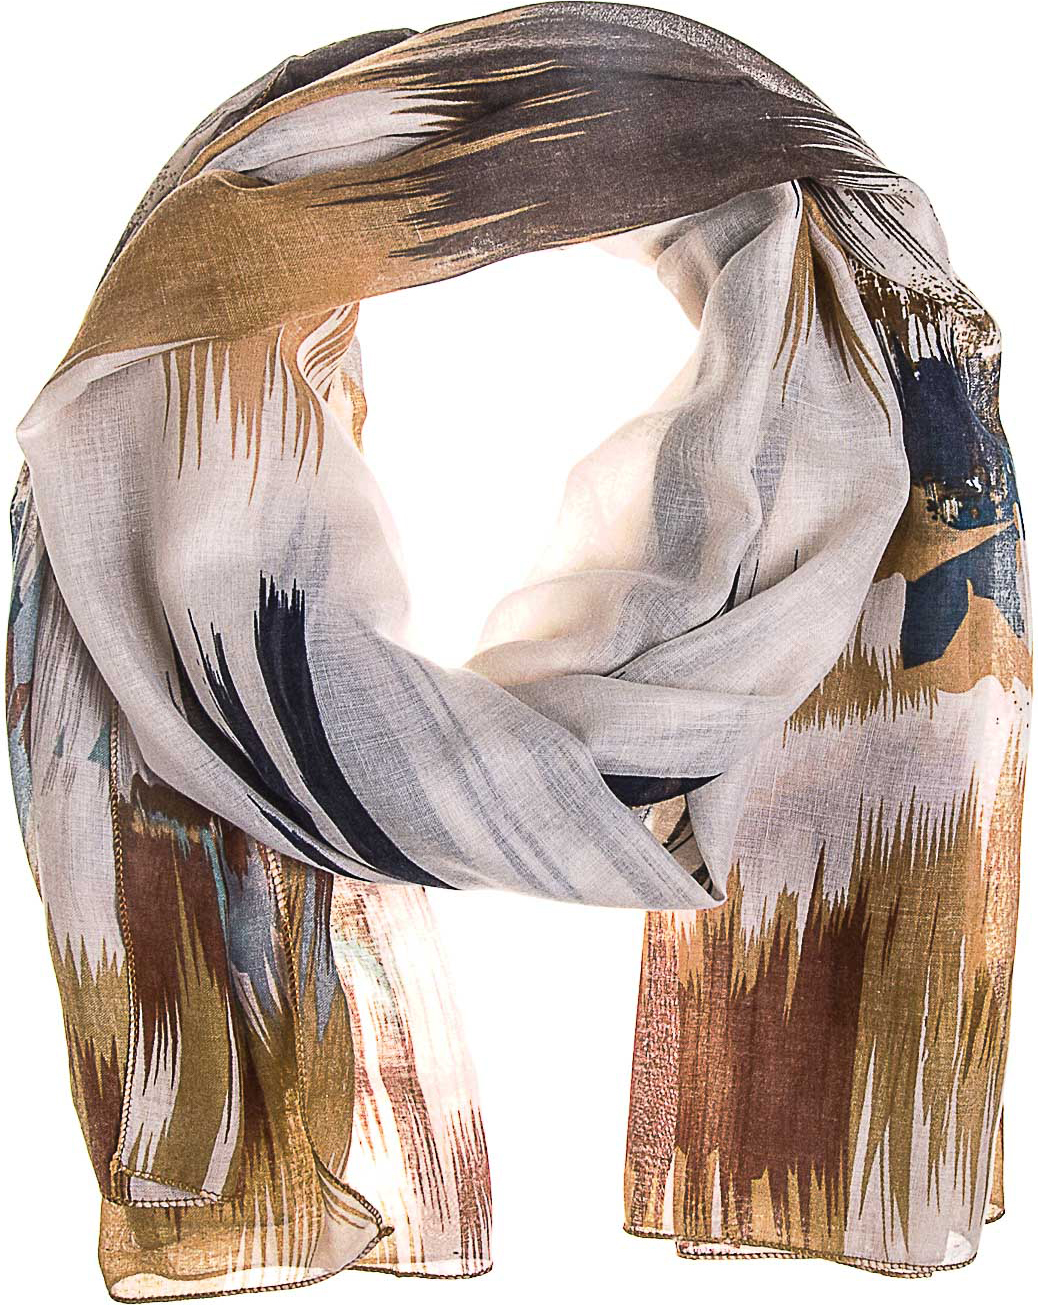 Палантин женский Vittorio Richi, цвет: серый, горчичный. KXV8607. Размер 180 х 90 см